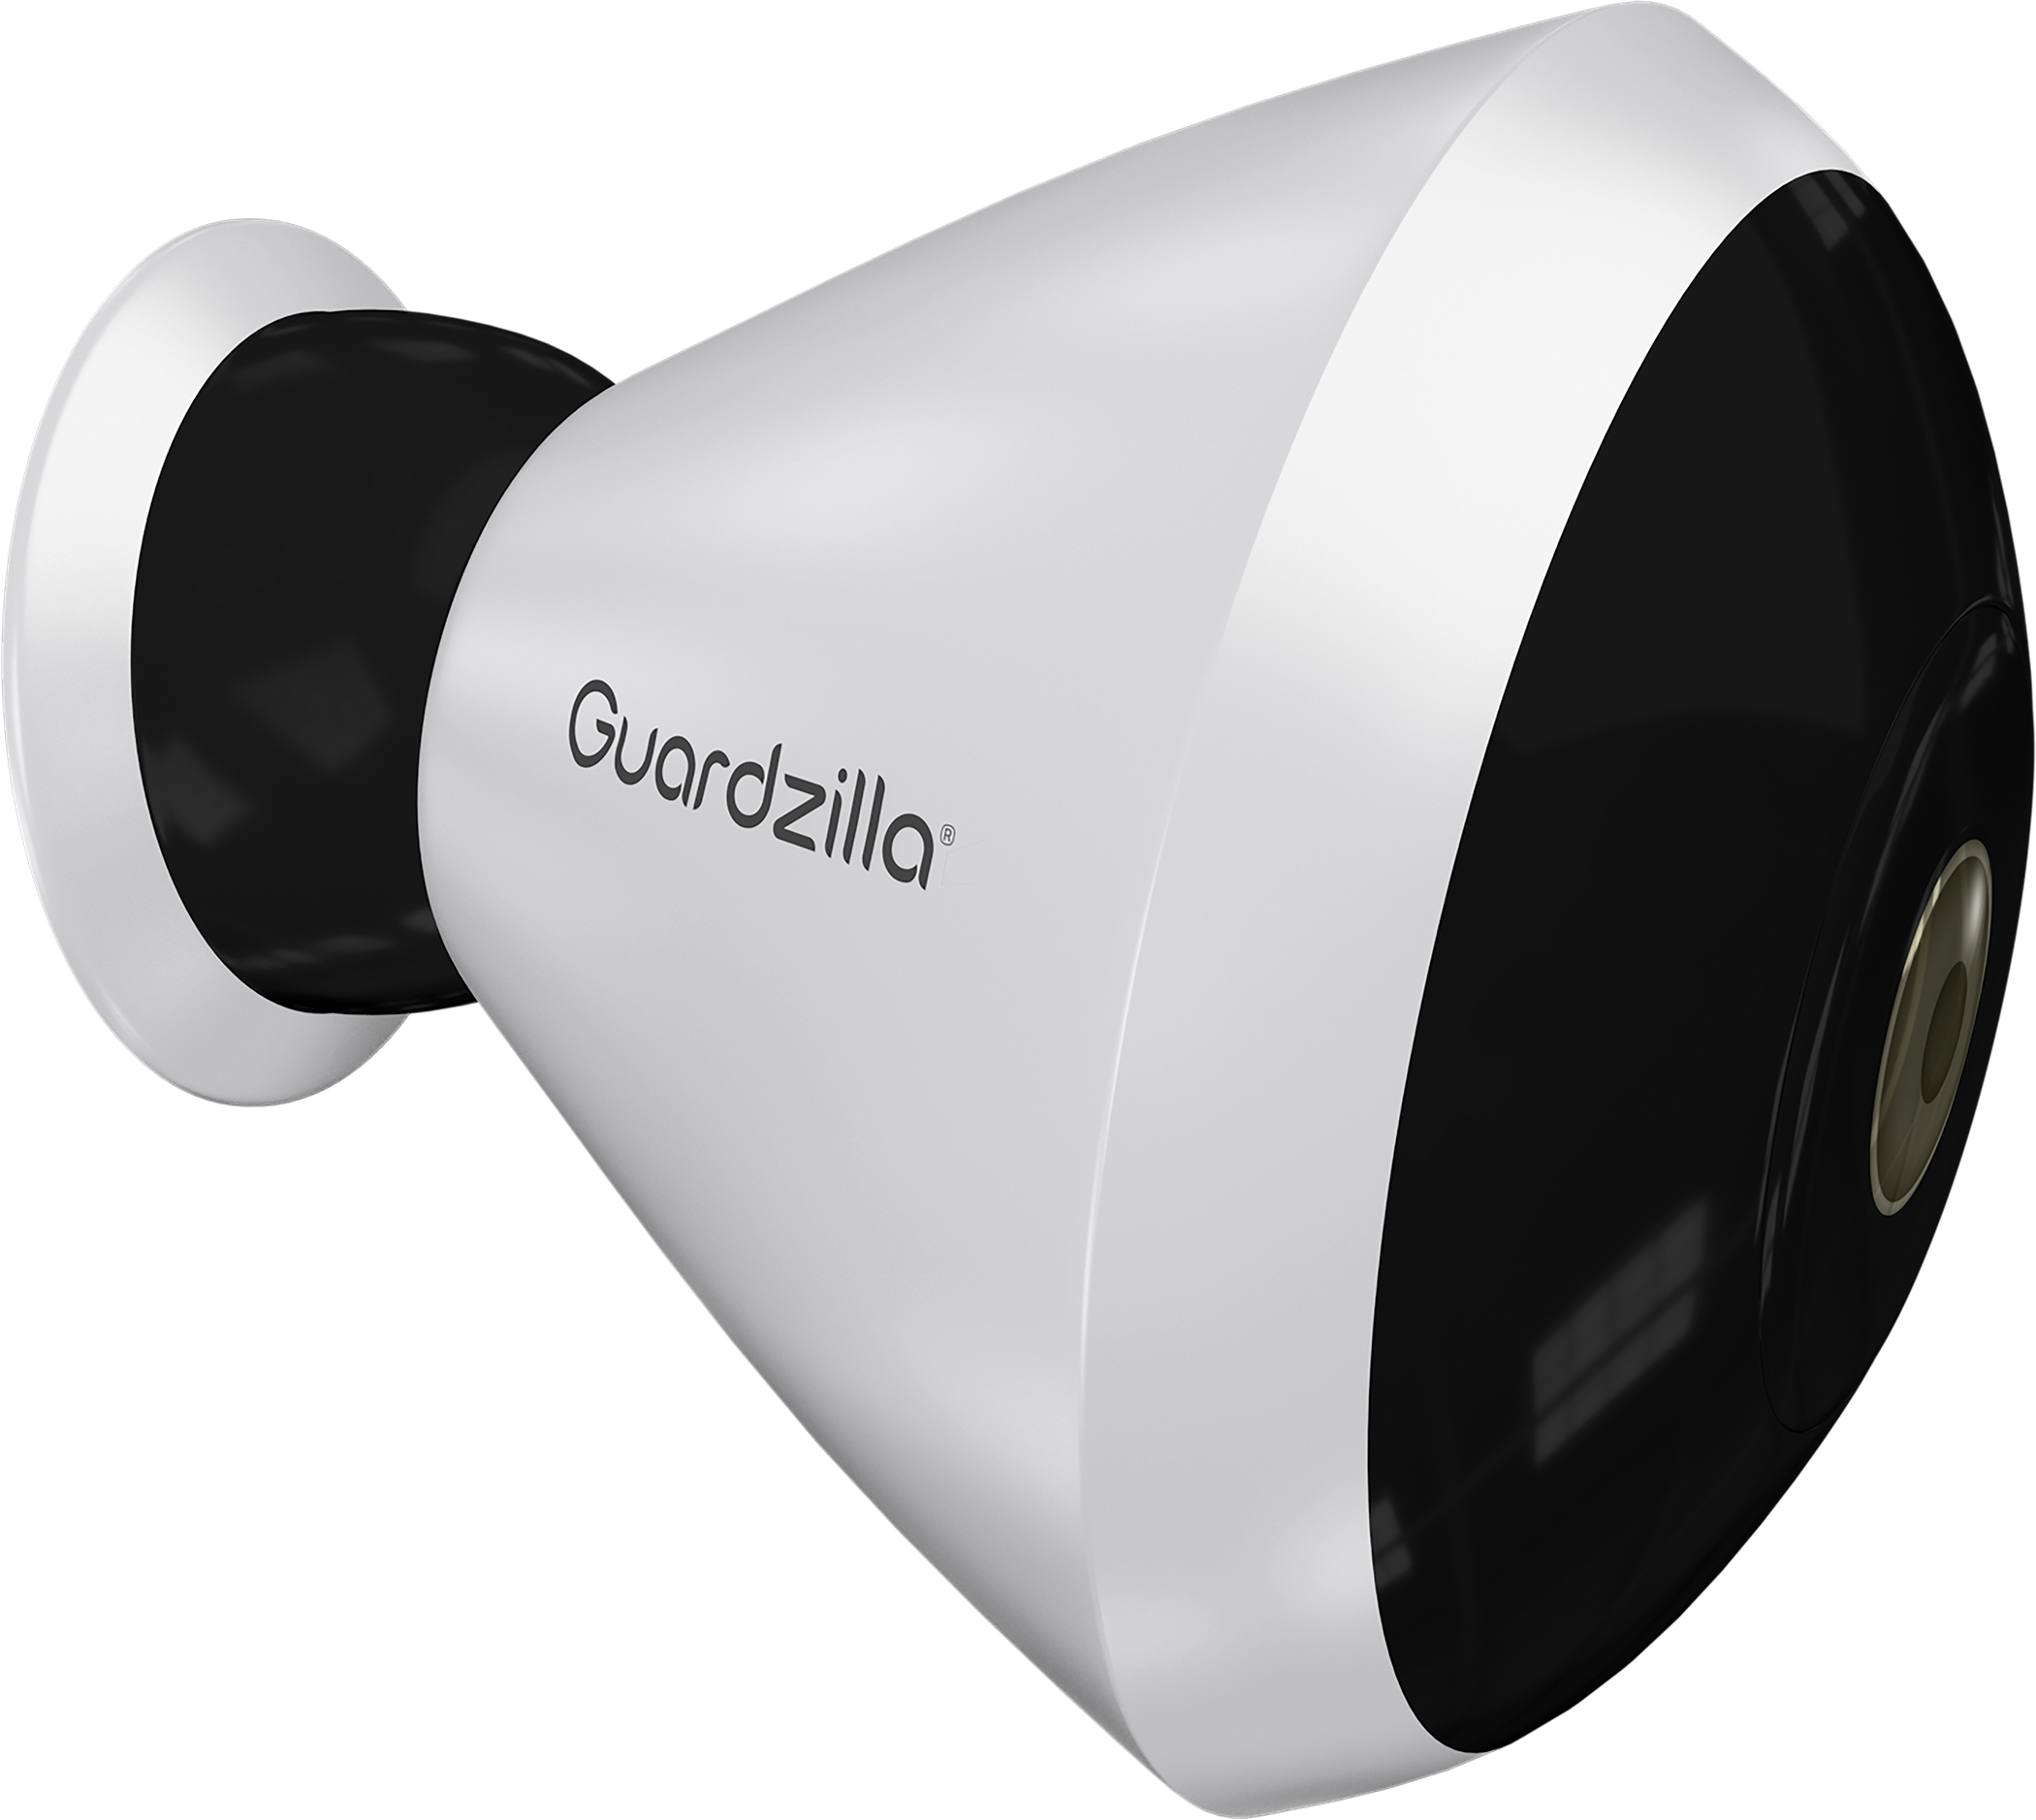 guardzilla 360 live video security camera